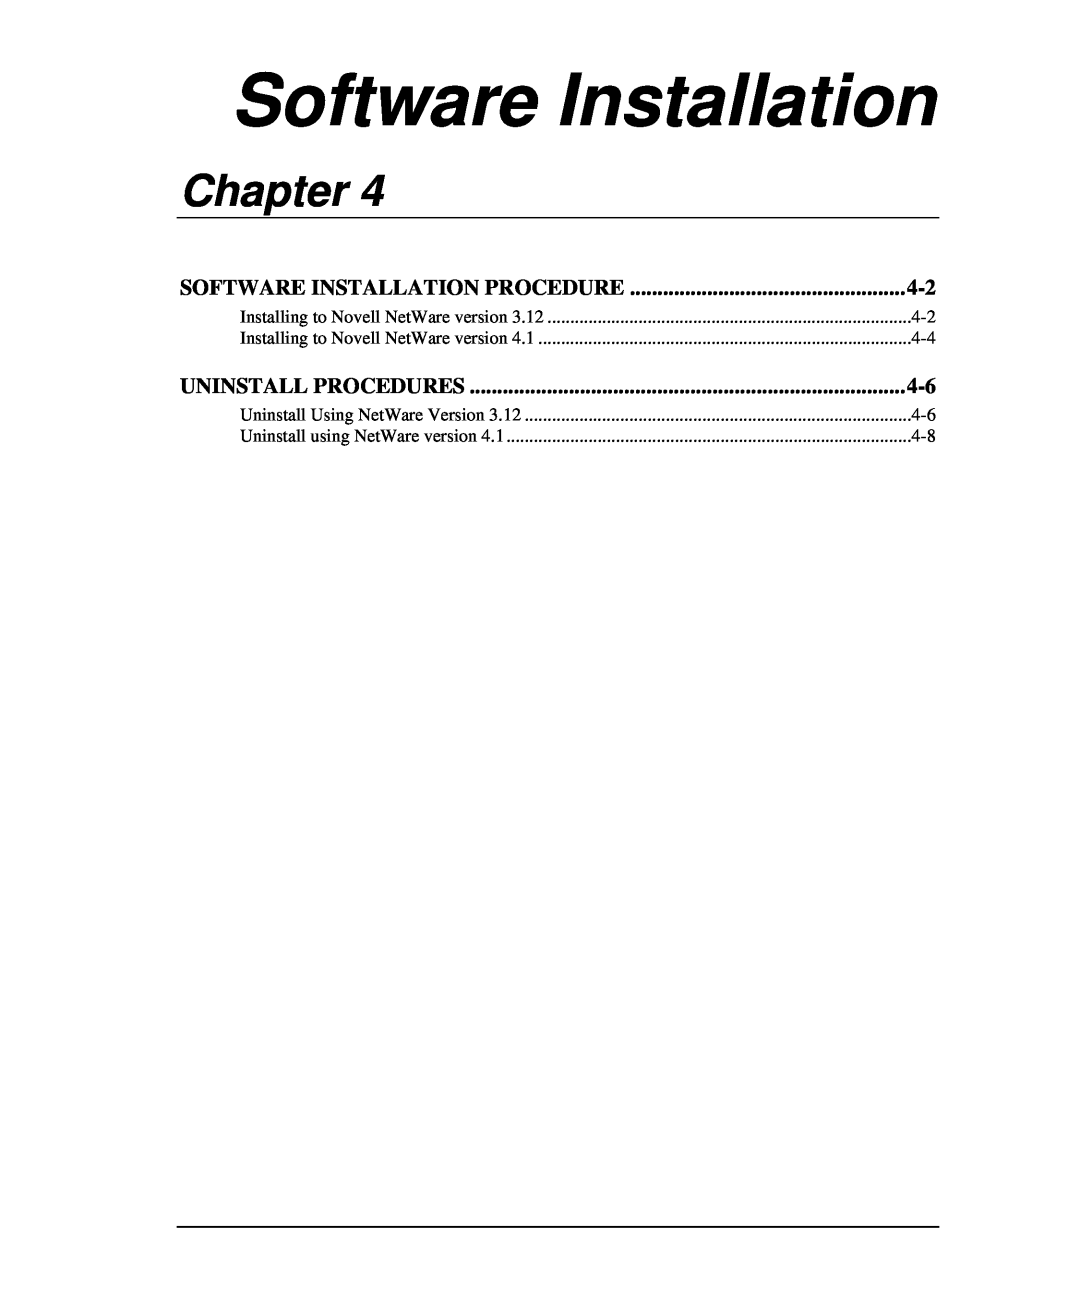 Emulex DCP_link manual Chapter, Software Installation Procedure, Uninstall Procedures 